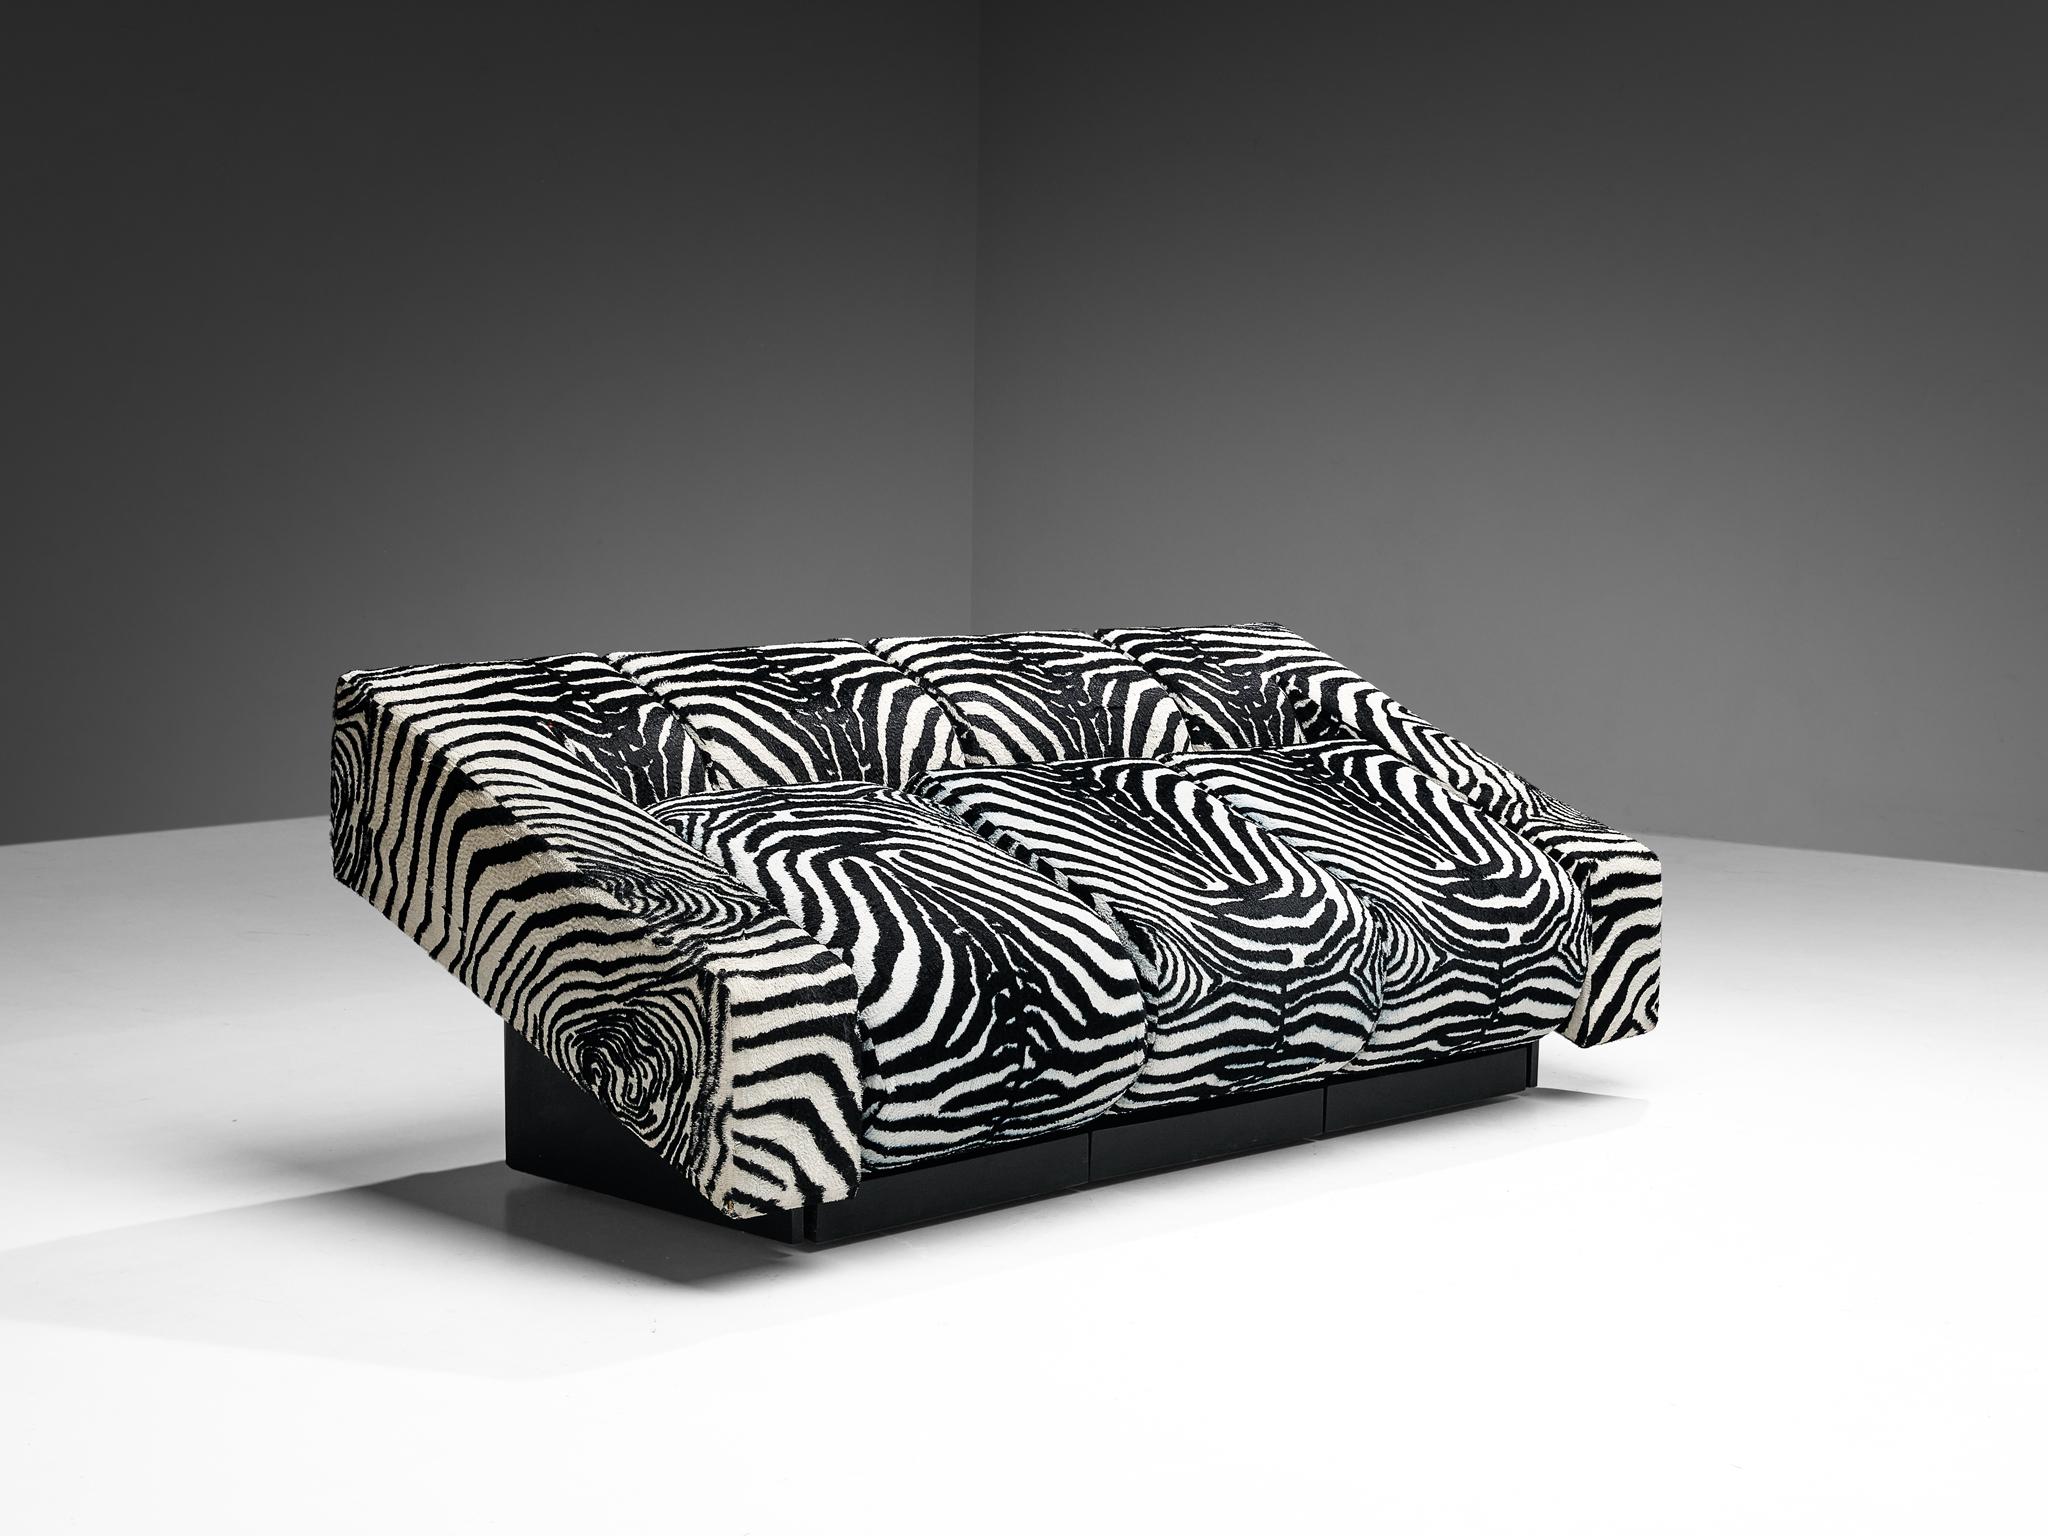 Mario Botta for Alias 'Obliqua' Sofa in Zebra Print Upholstery In Good Condition For Sale In Waalwijk, NL